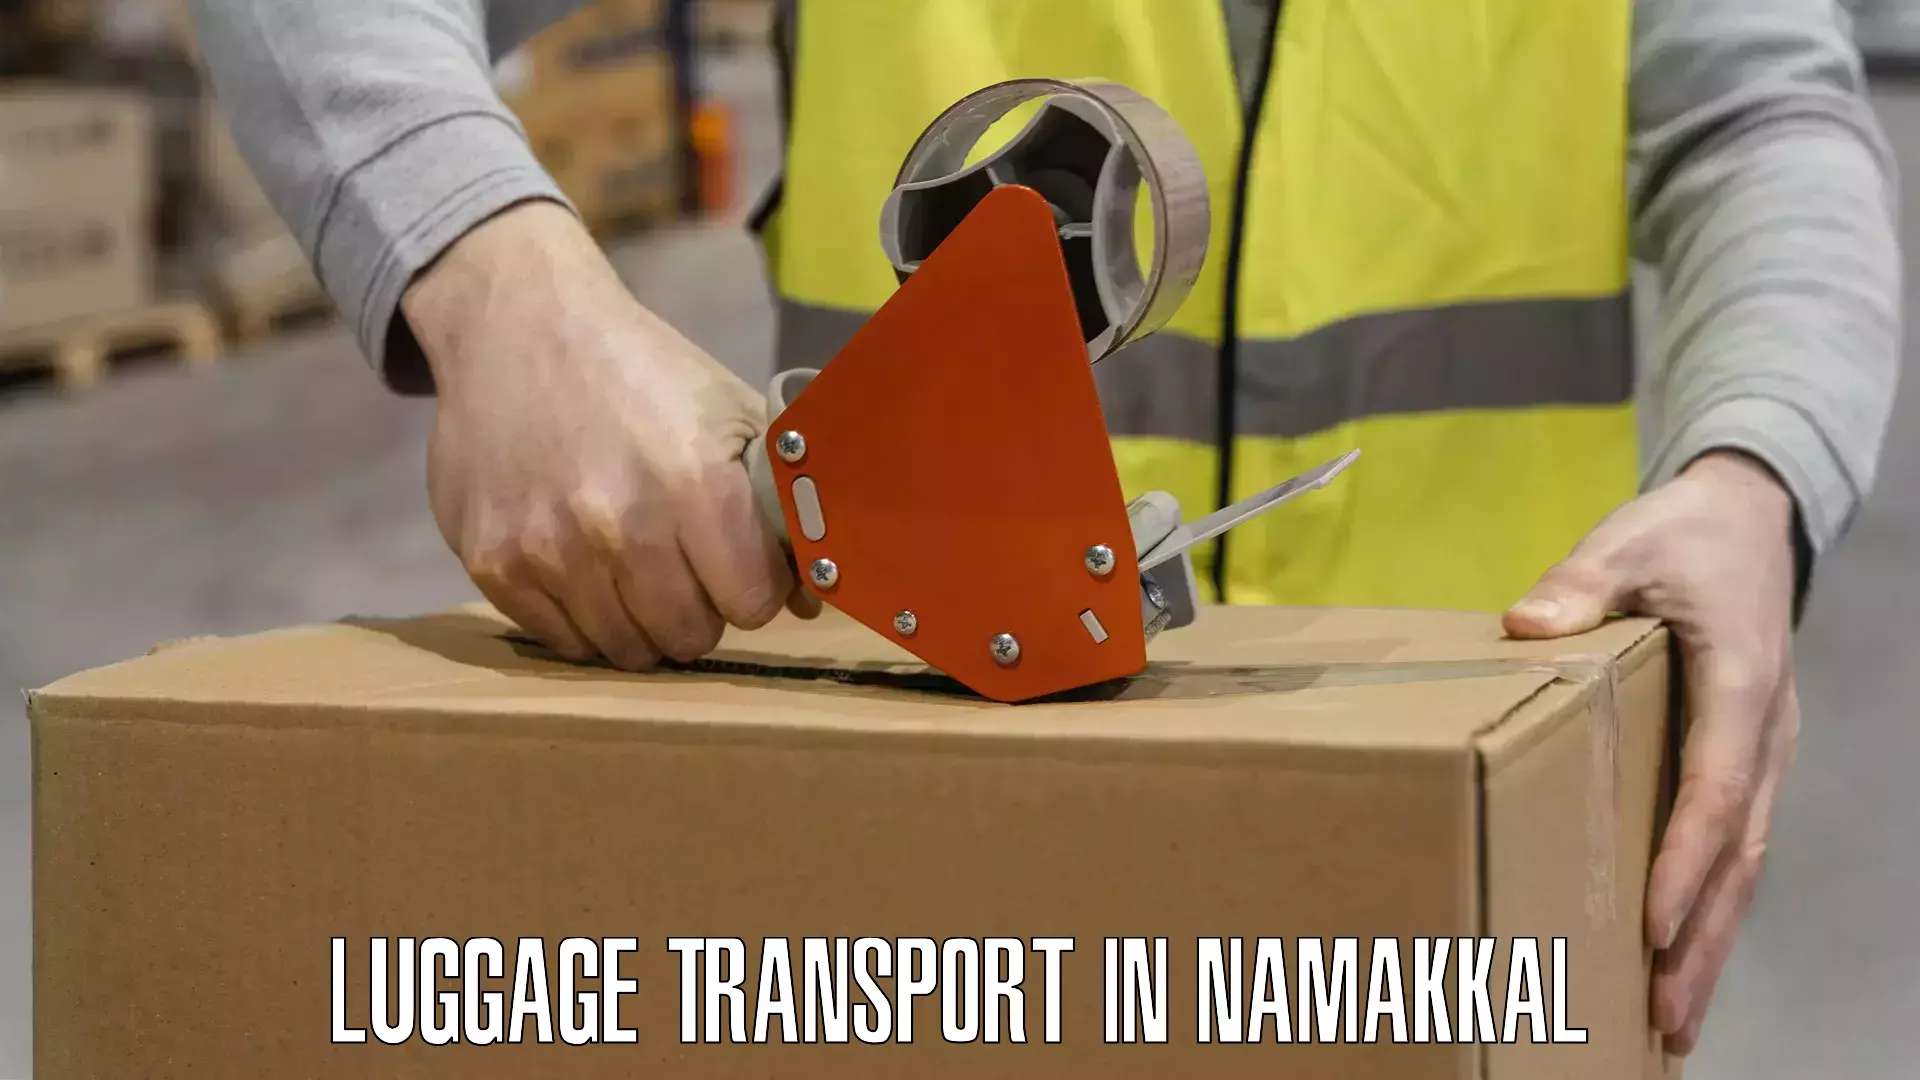 Luggage transport company in Namakkal